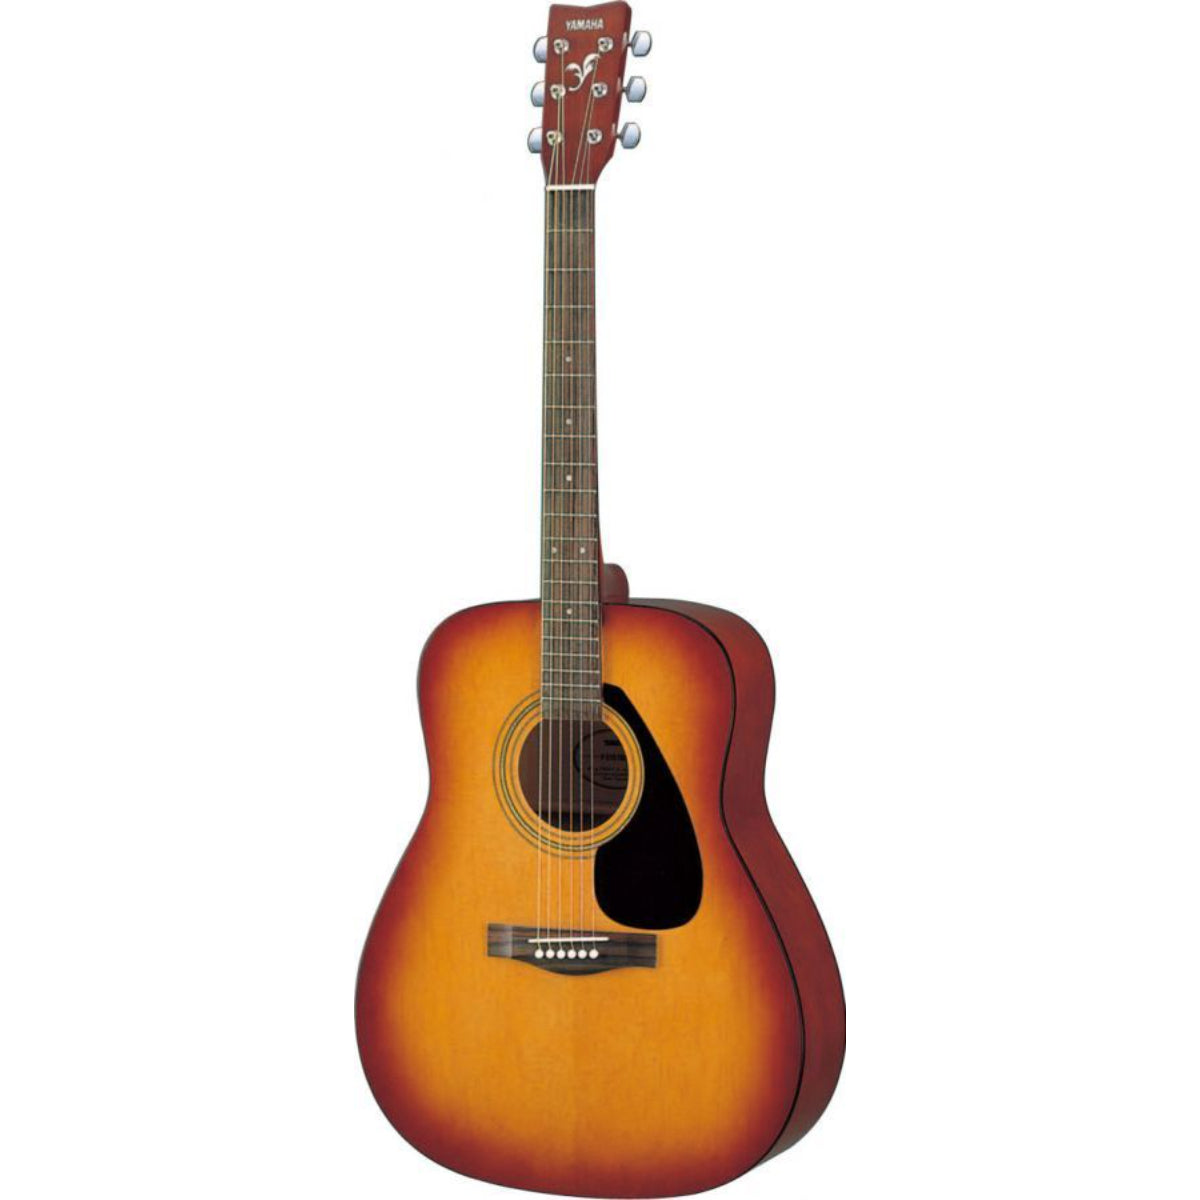 F310TBSII Acoustic - Guitar only, Tobacco Sunburst